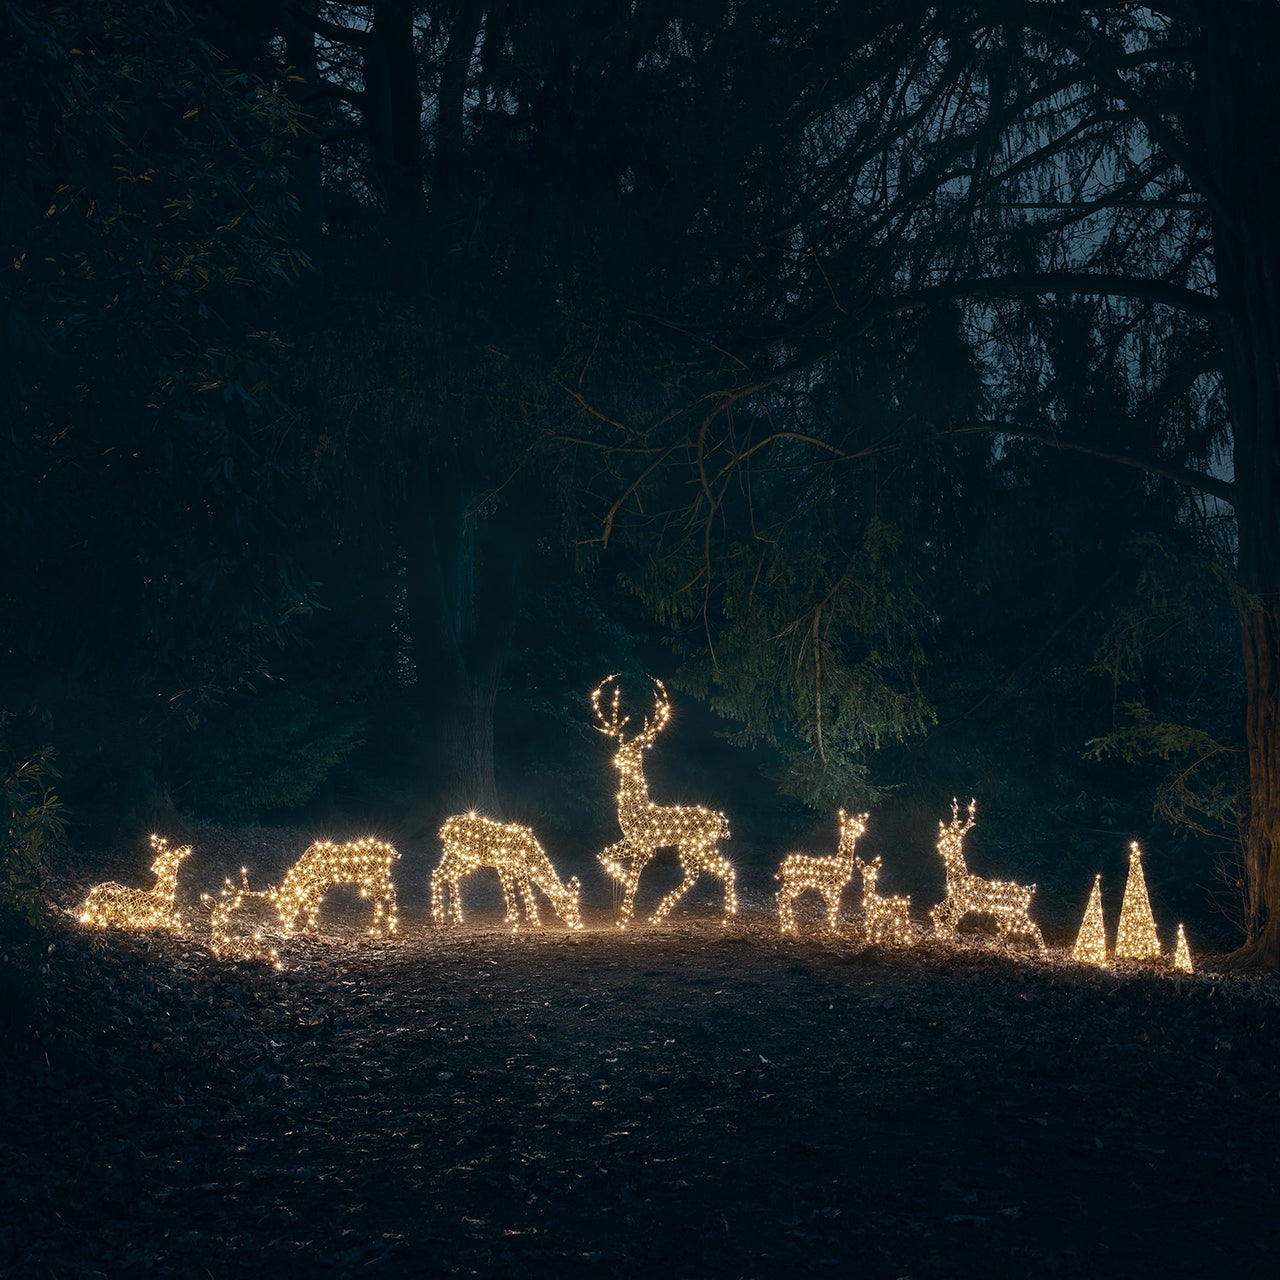 Studley Rattan Light Up Reindeer Family Christmas Figures 24v